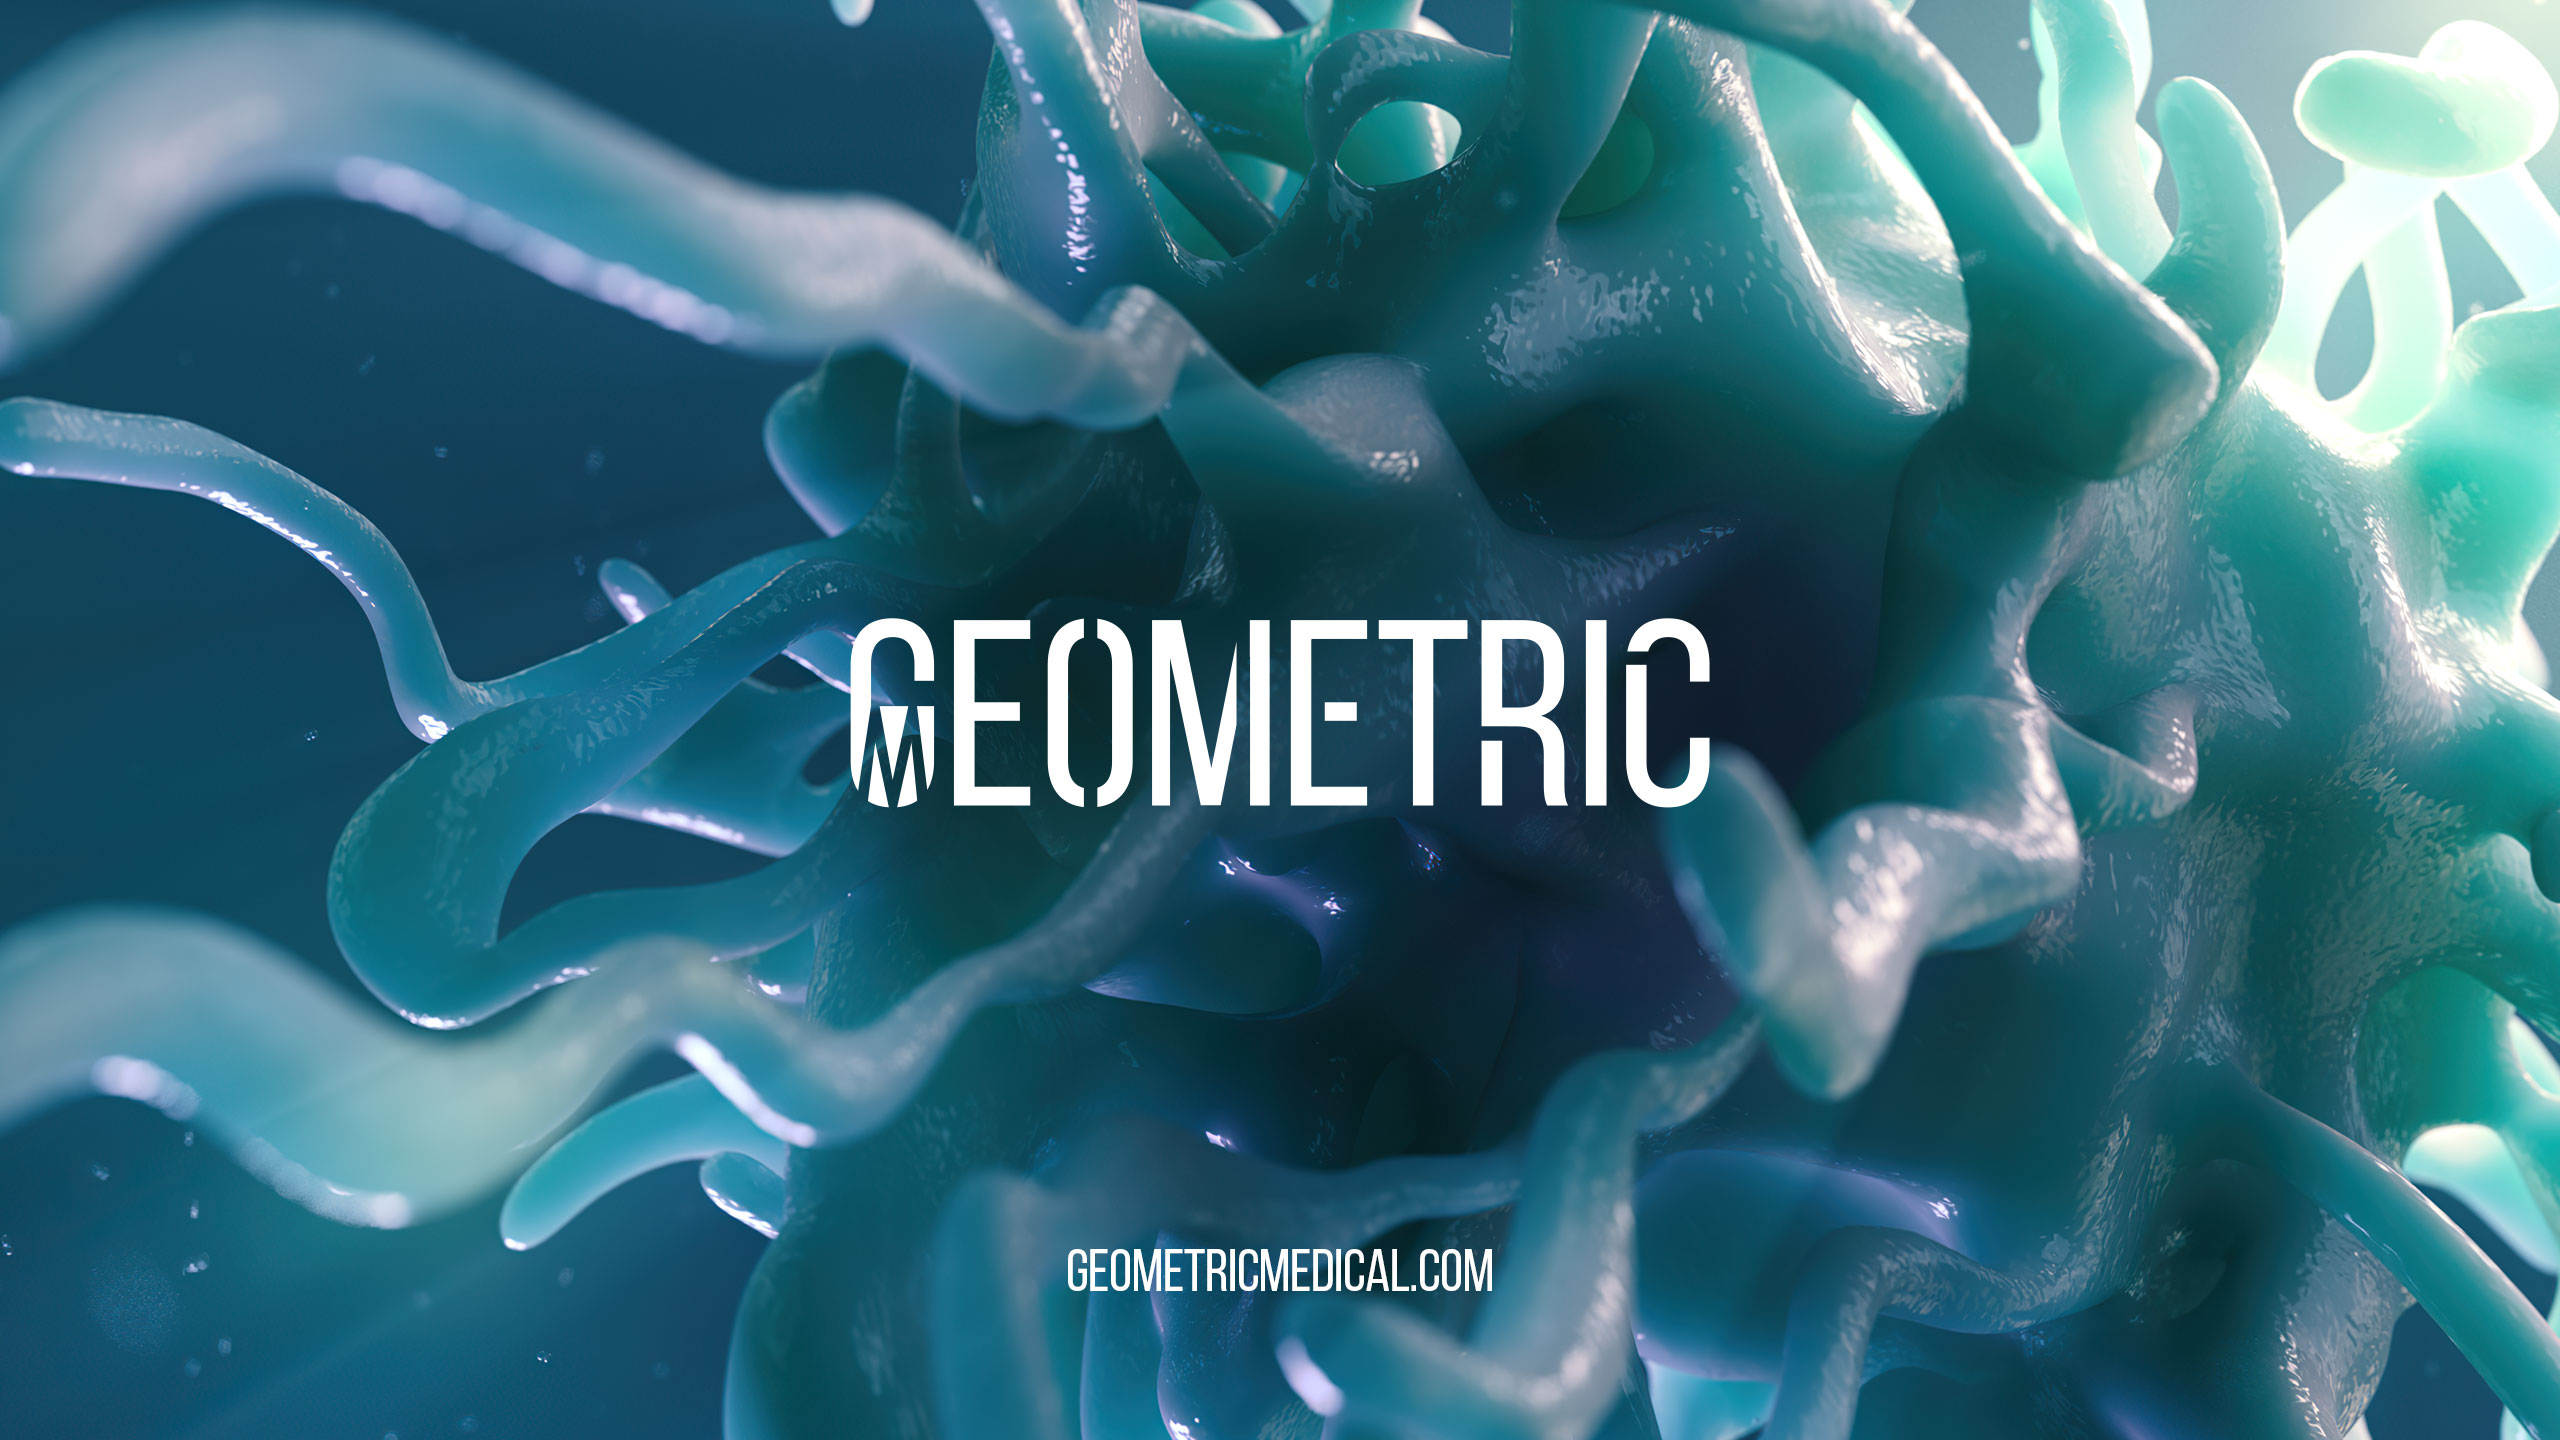 Main image for Geometric Medical Animation